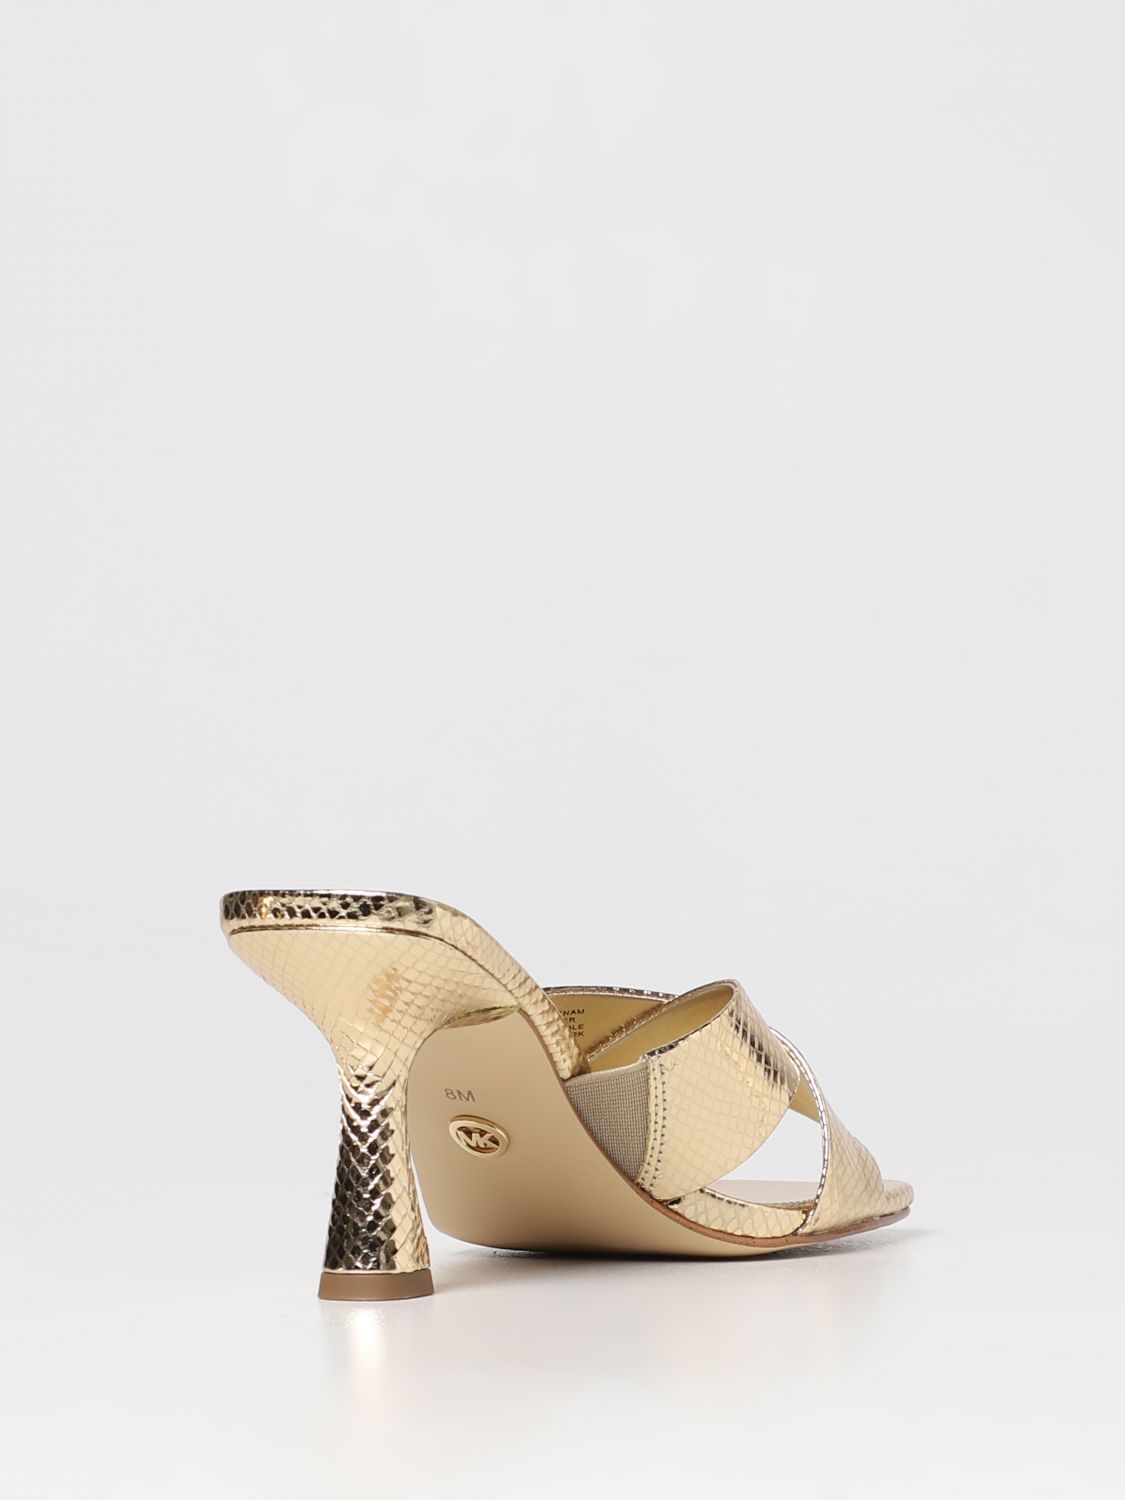 kalmeren Correspondent Grazen MICHAEL KORS: heeled sandals for woman - Gold | Michael Kors heeled sandals  40S3CLMS1M online on GIGLIO.COM